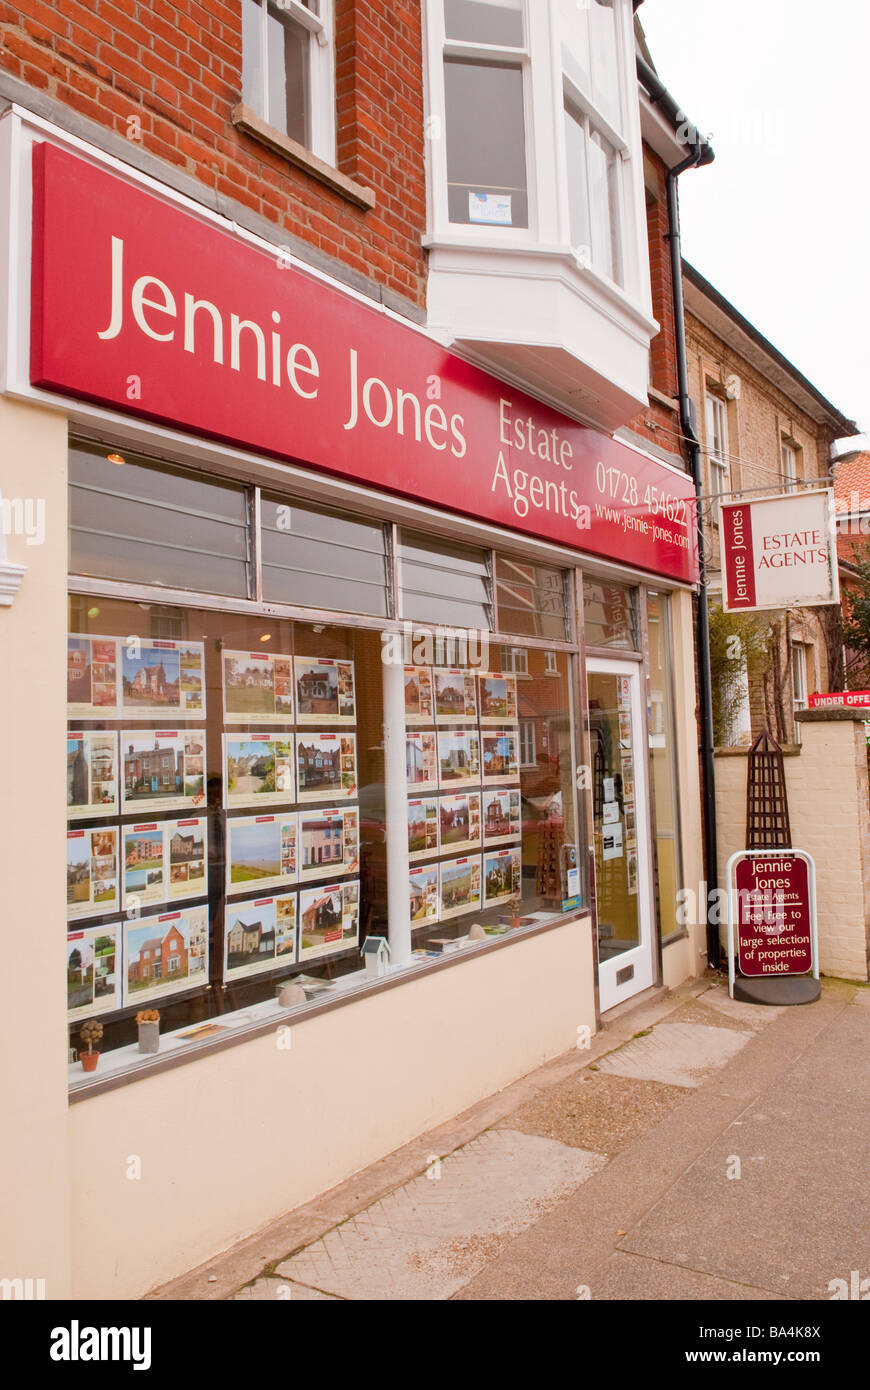 Jennie Jones the estate agents in Aldeburgh,Suffolk,Uk Stock Photo